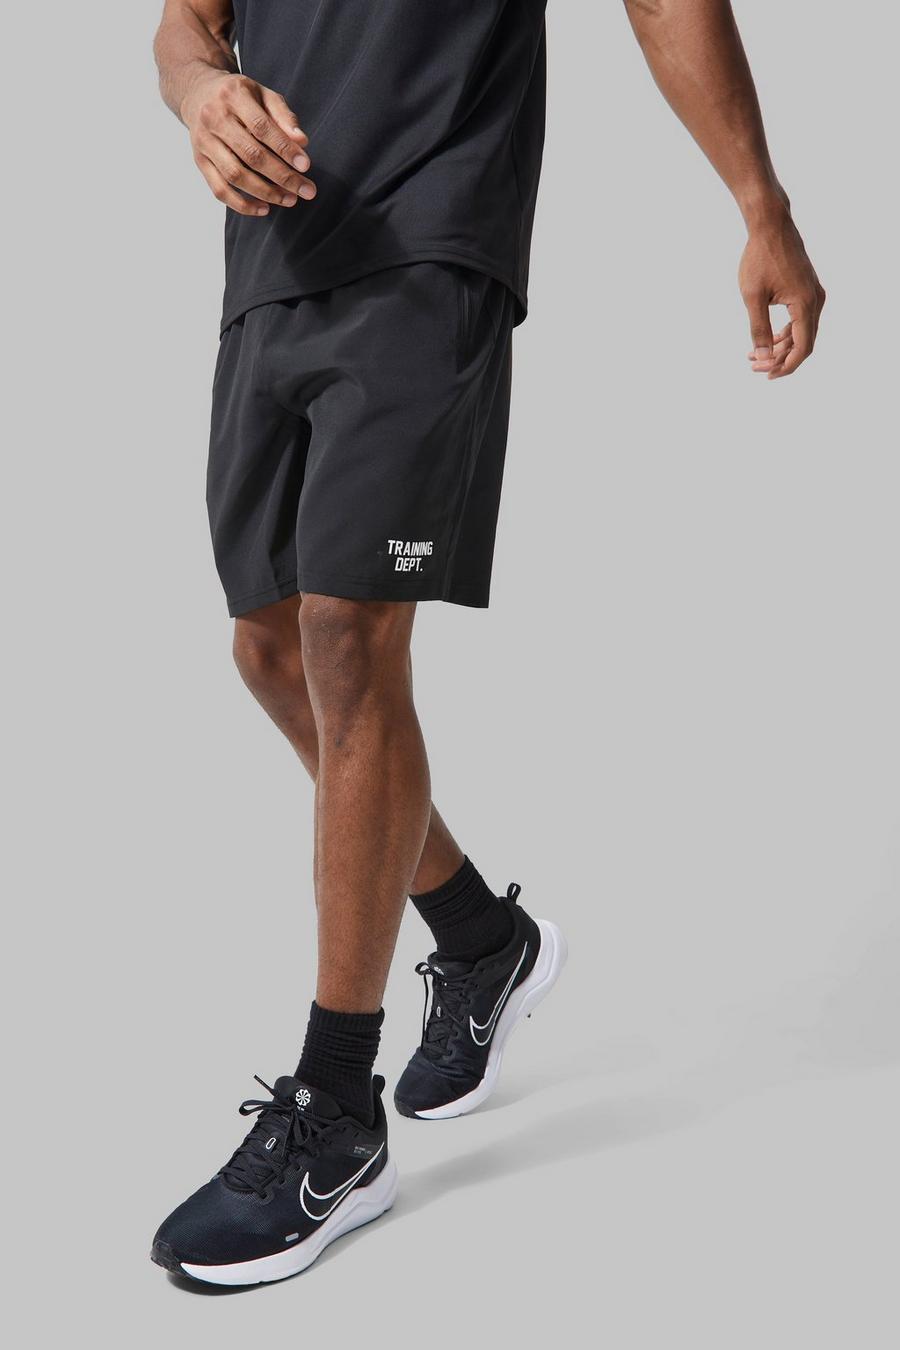 Tall Man Active Performance Trainings Dept Shorts, Black